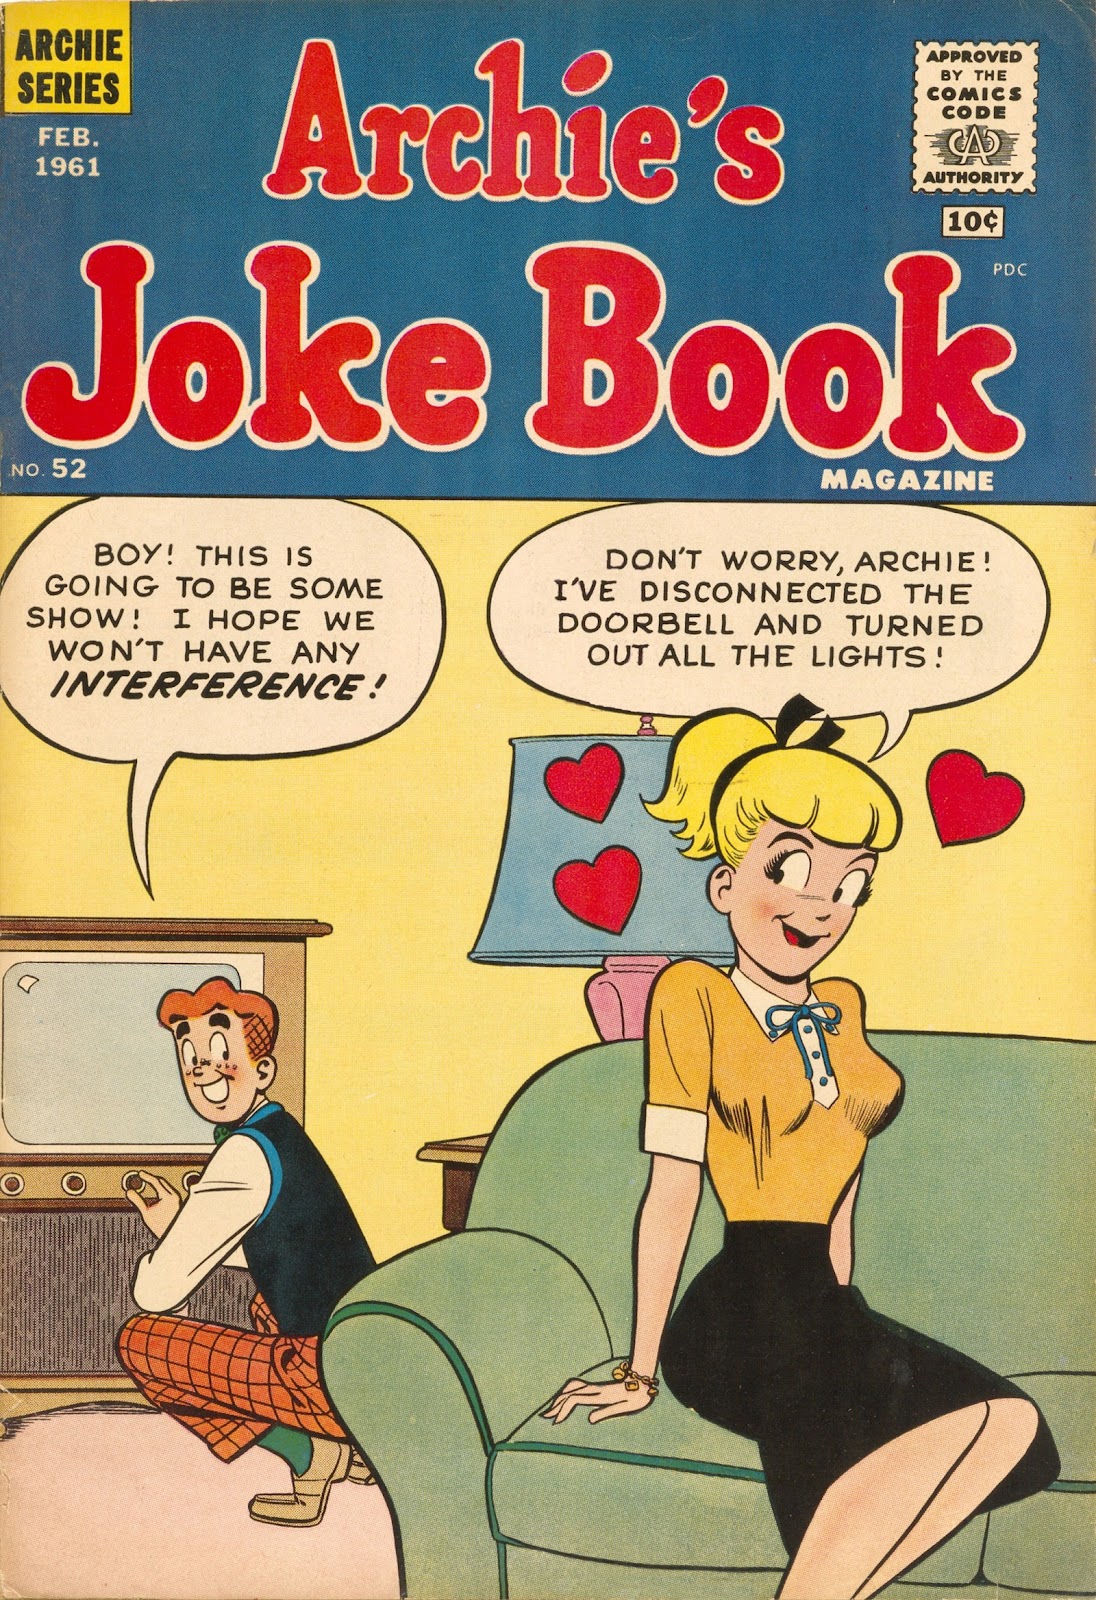 Archie's Joke Book Magazine issue 52 - Page 1